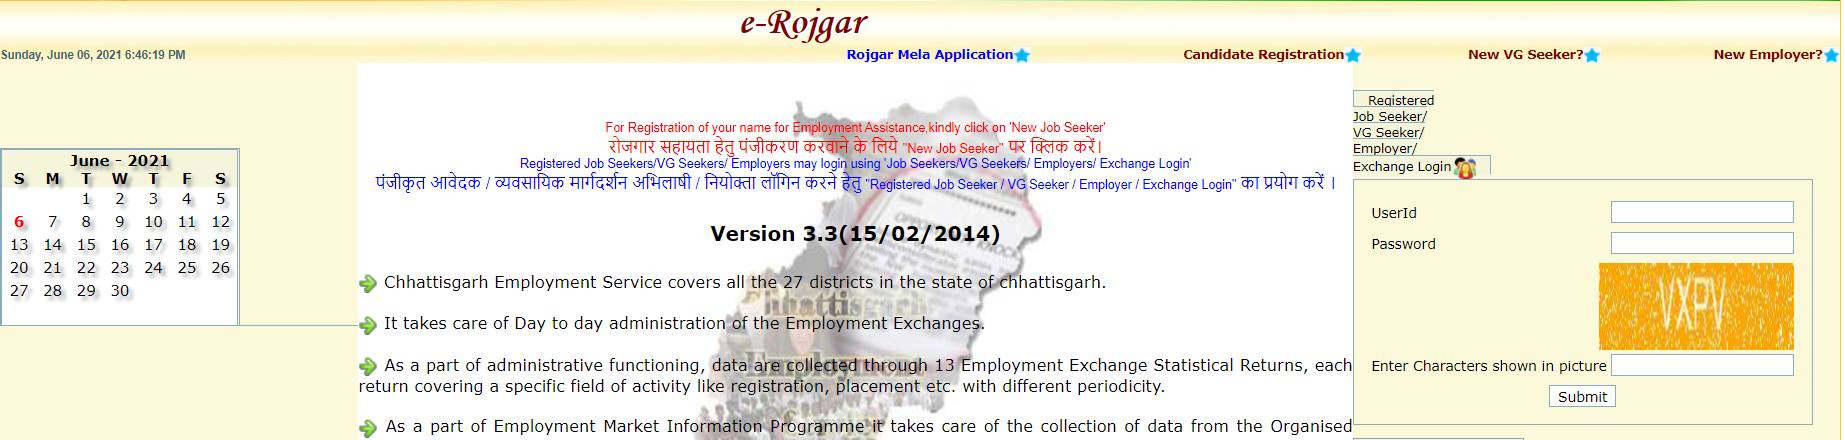 cg rojgar panjiyan new user registration